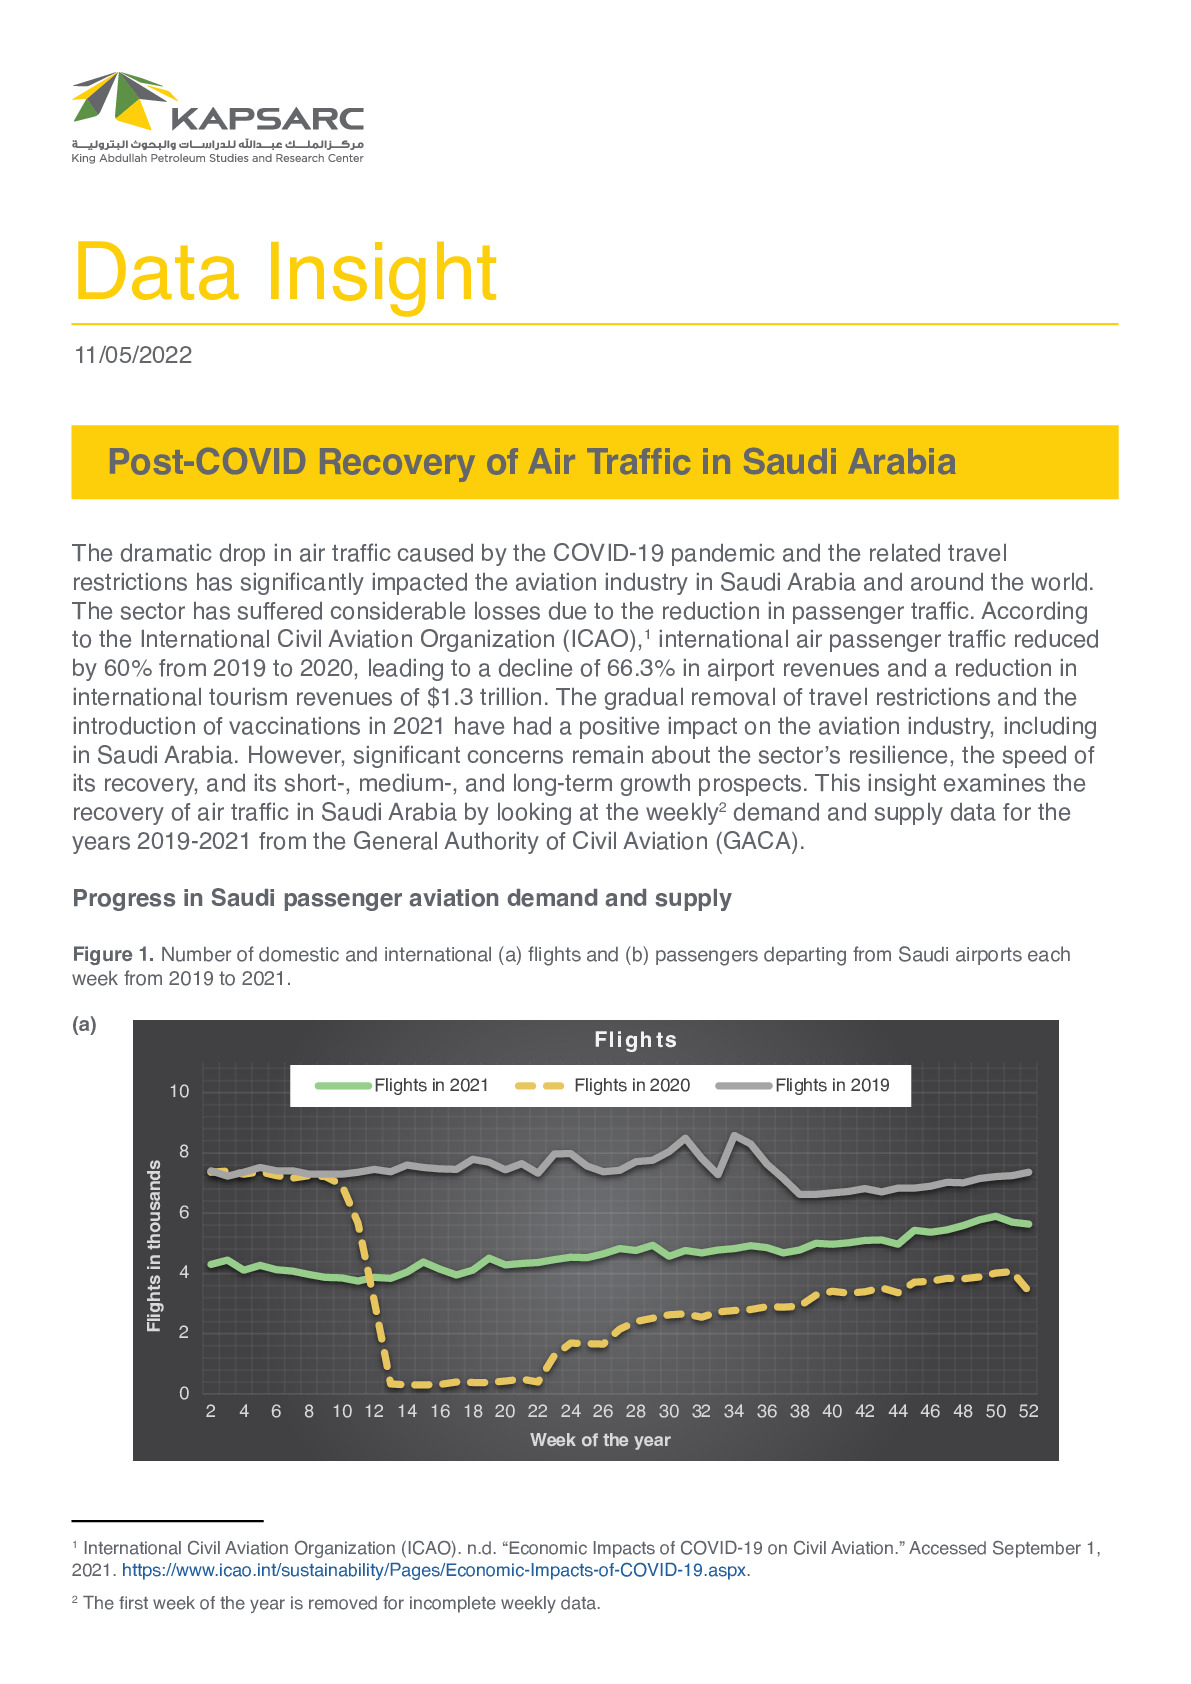 Post-Covid Recovery of Air Traffic in Saudi Arabia